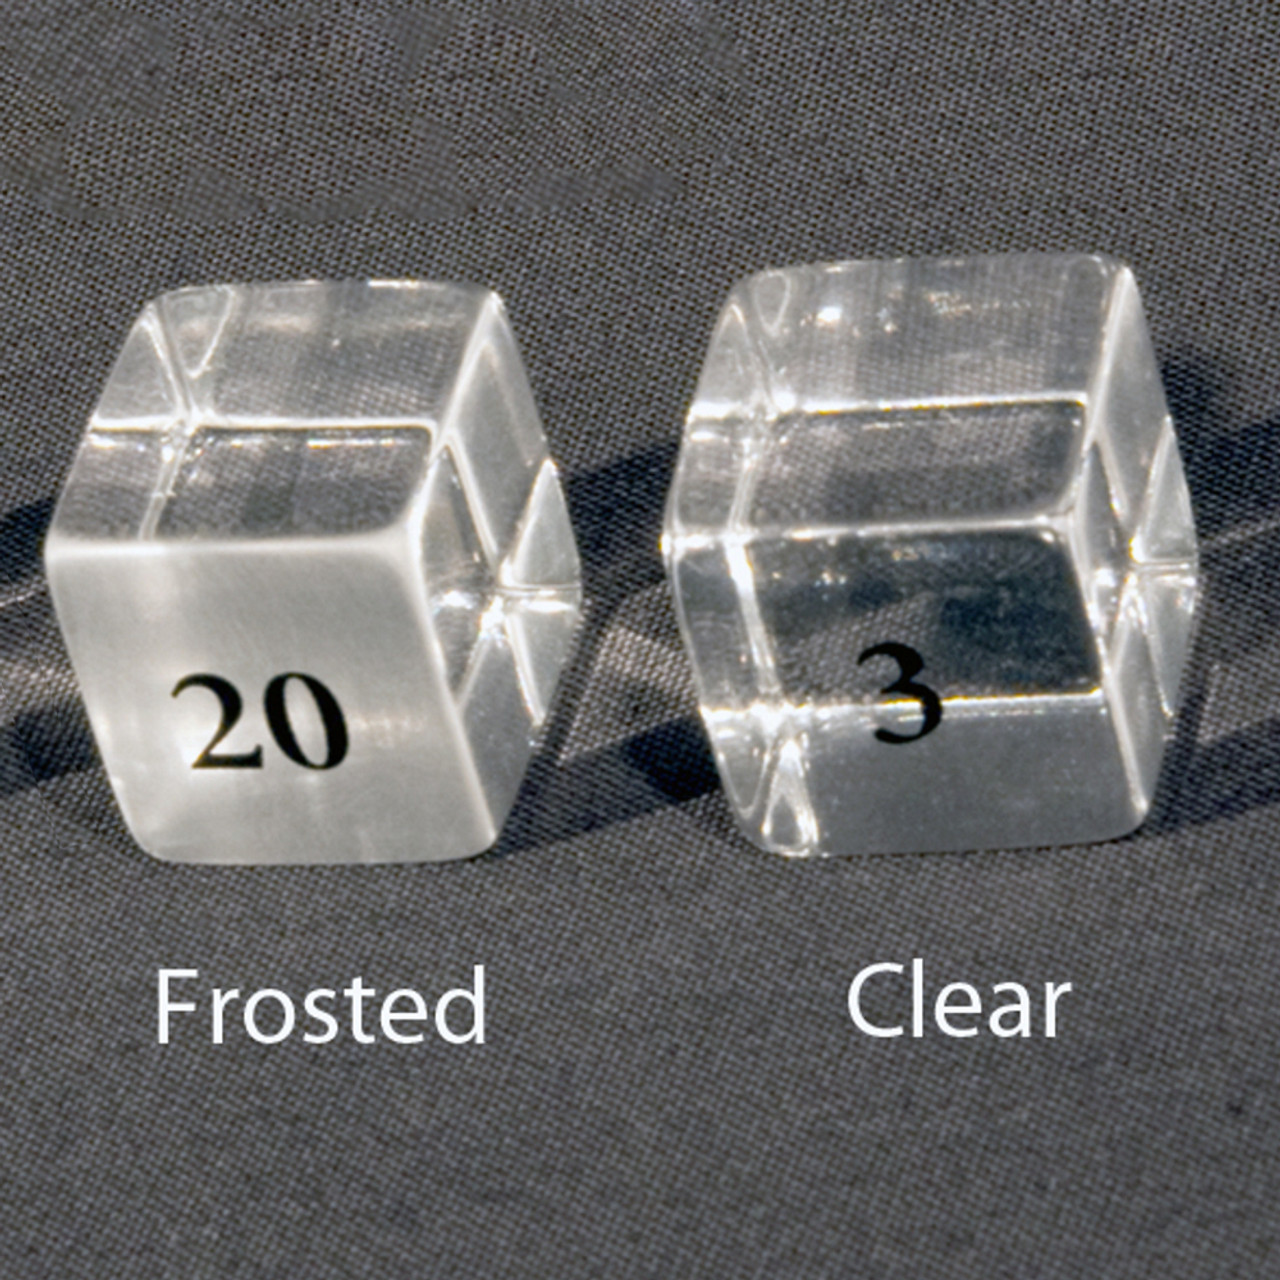 Acrylic Marker Cubes